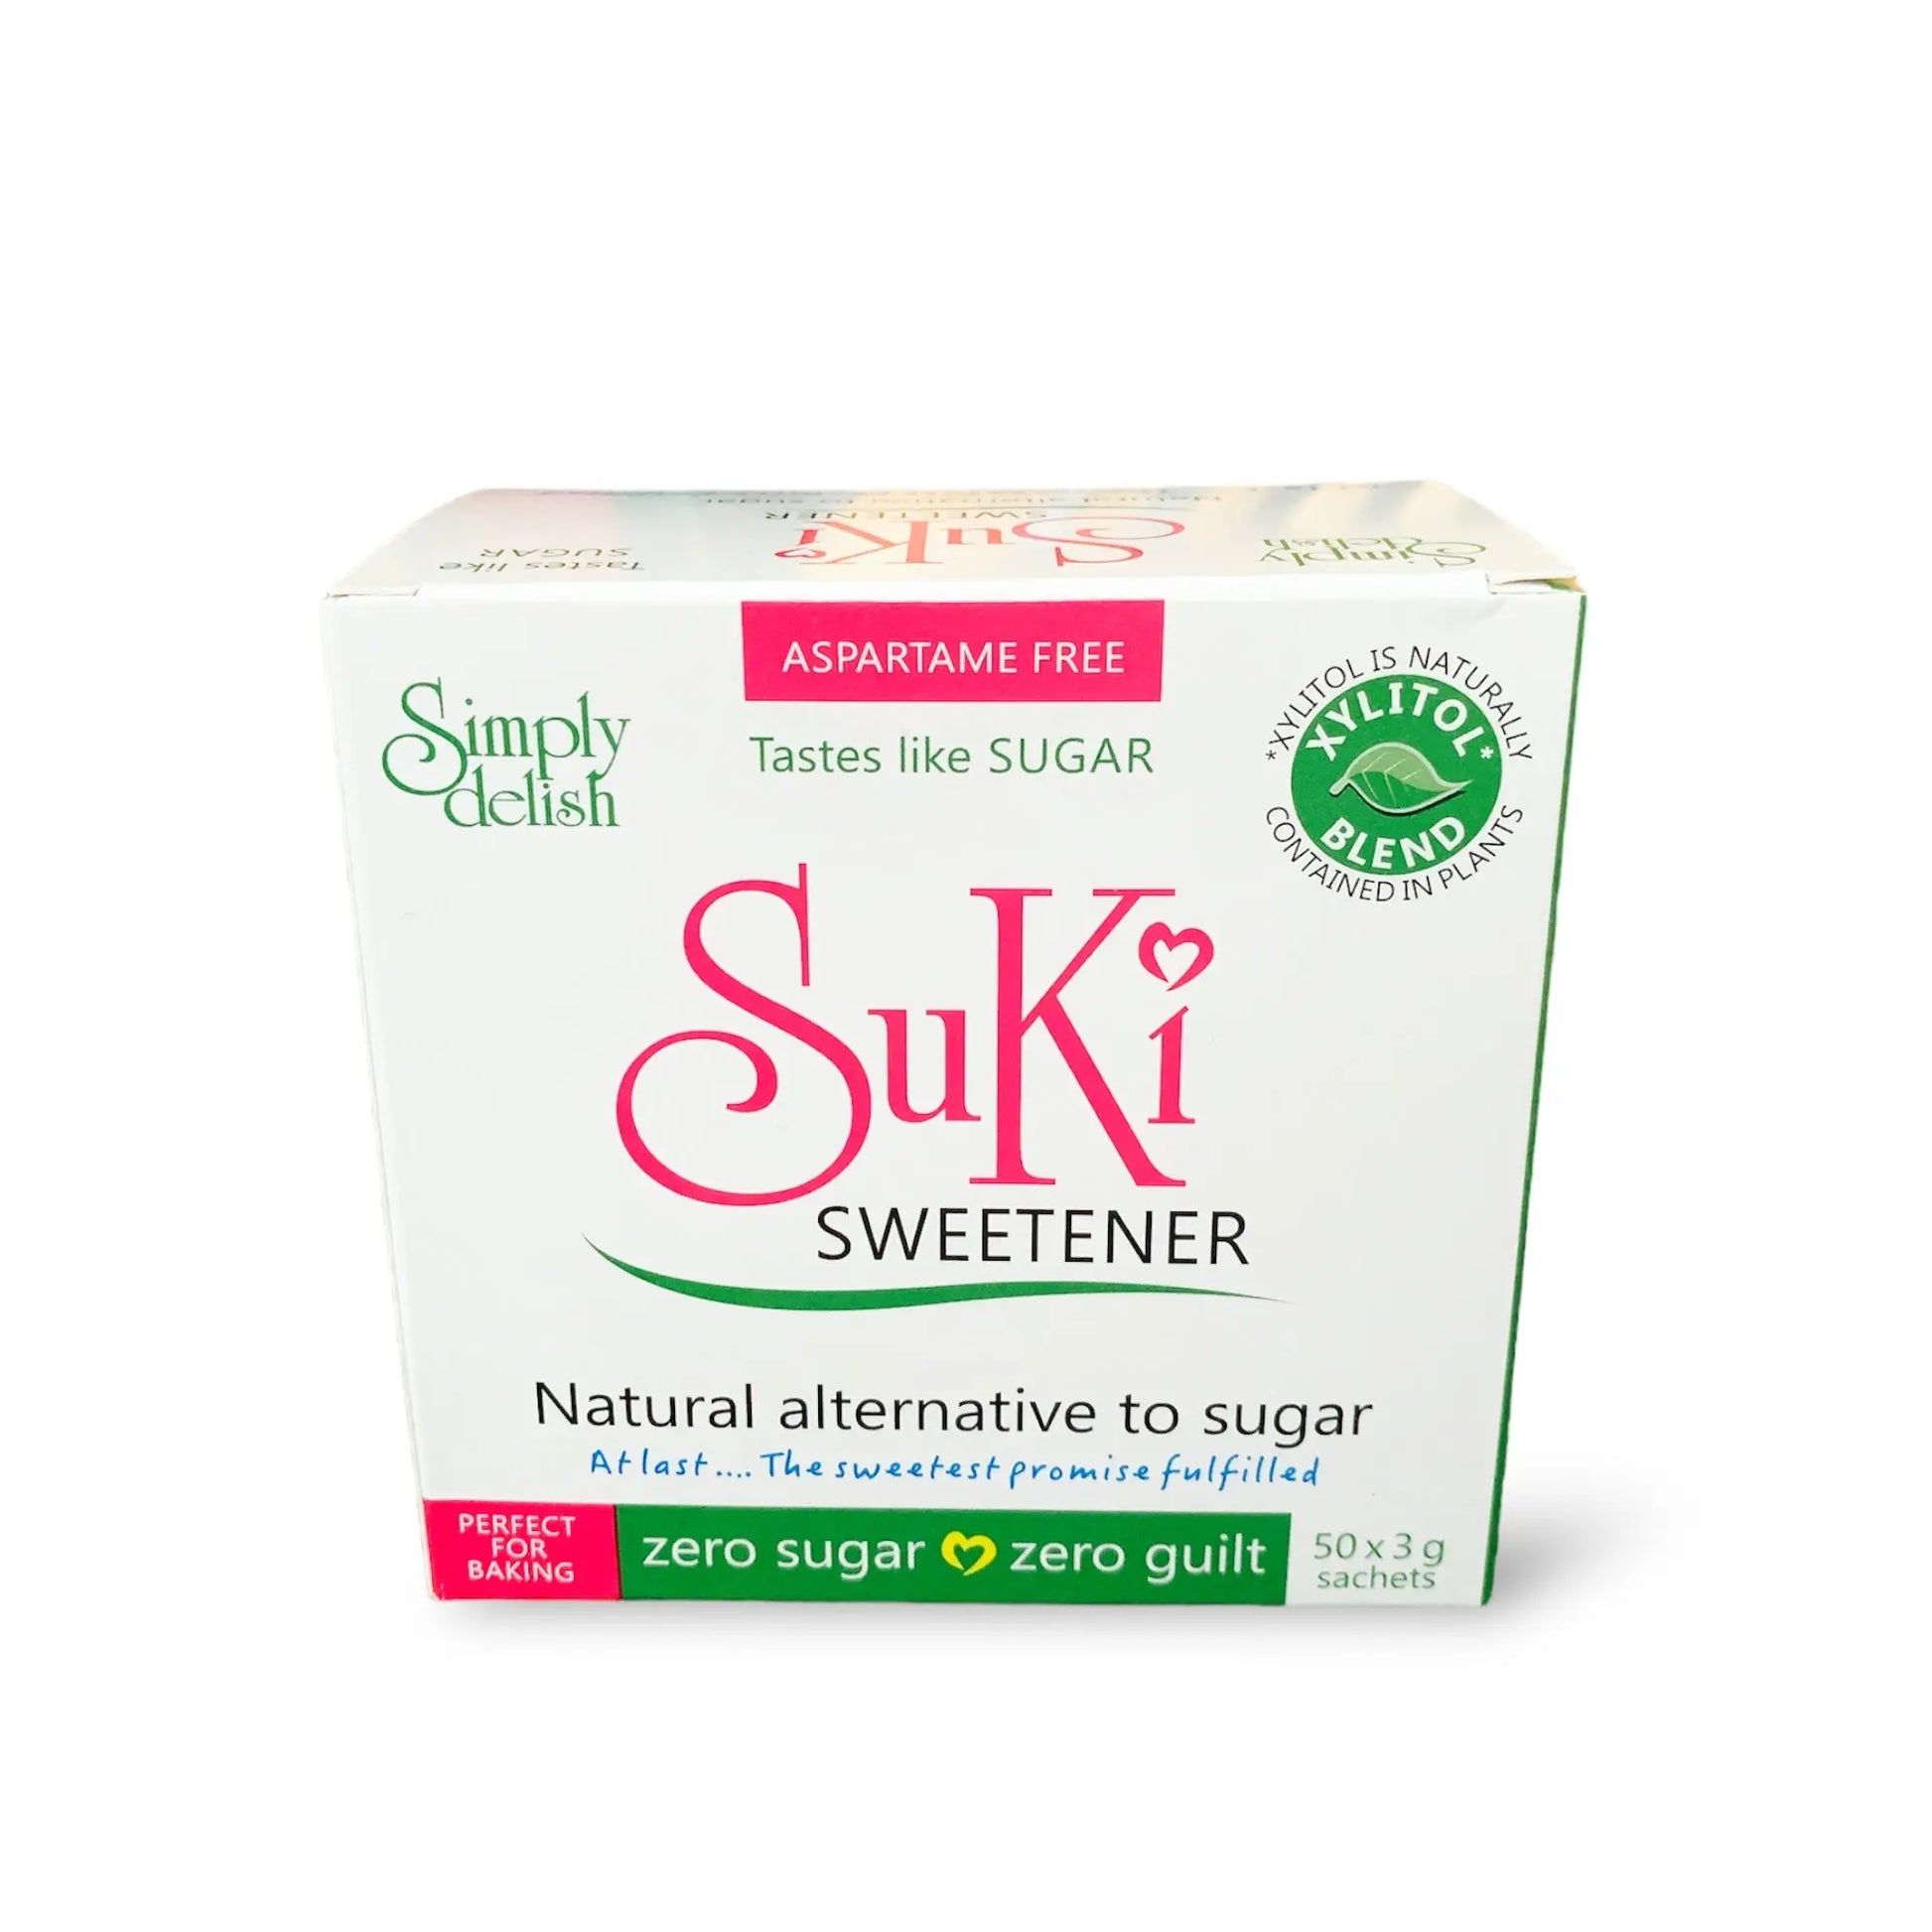 simply delish suki sweetener xylitol and stevia